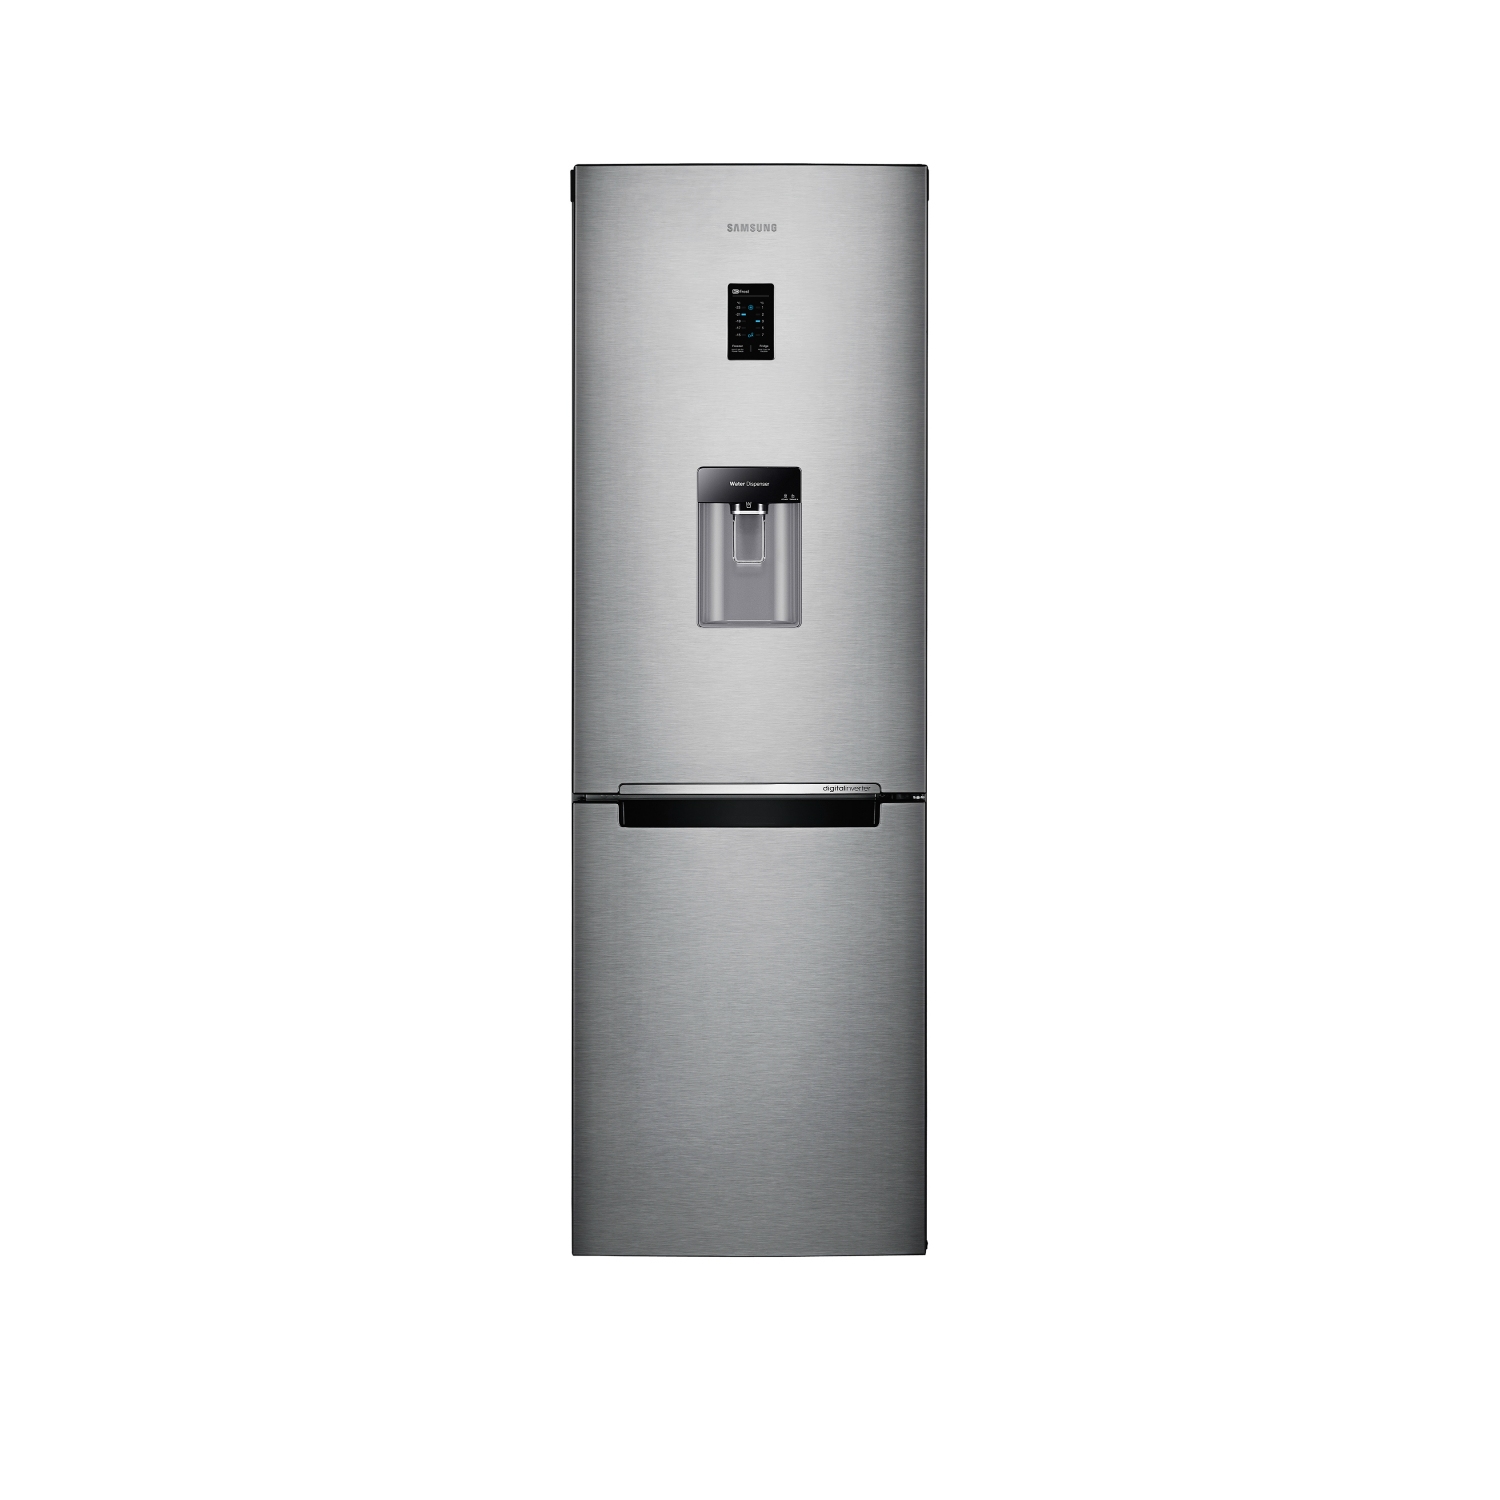 Samsung 60cm Total No Frost Fridge Freezer - Water Dispenser - Silver - 0